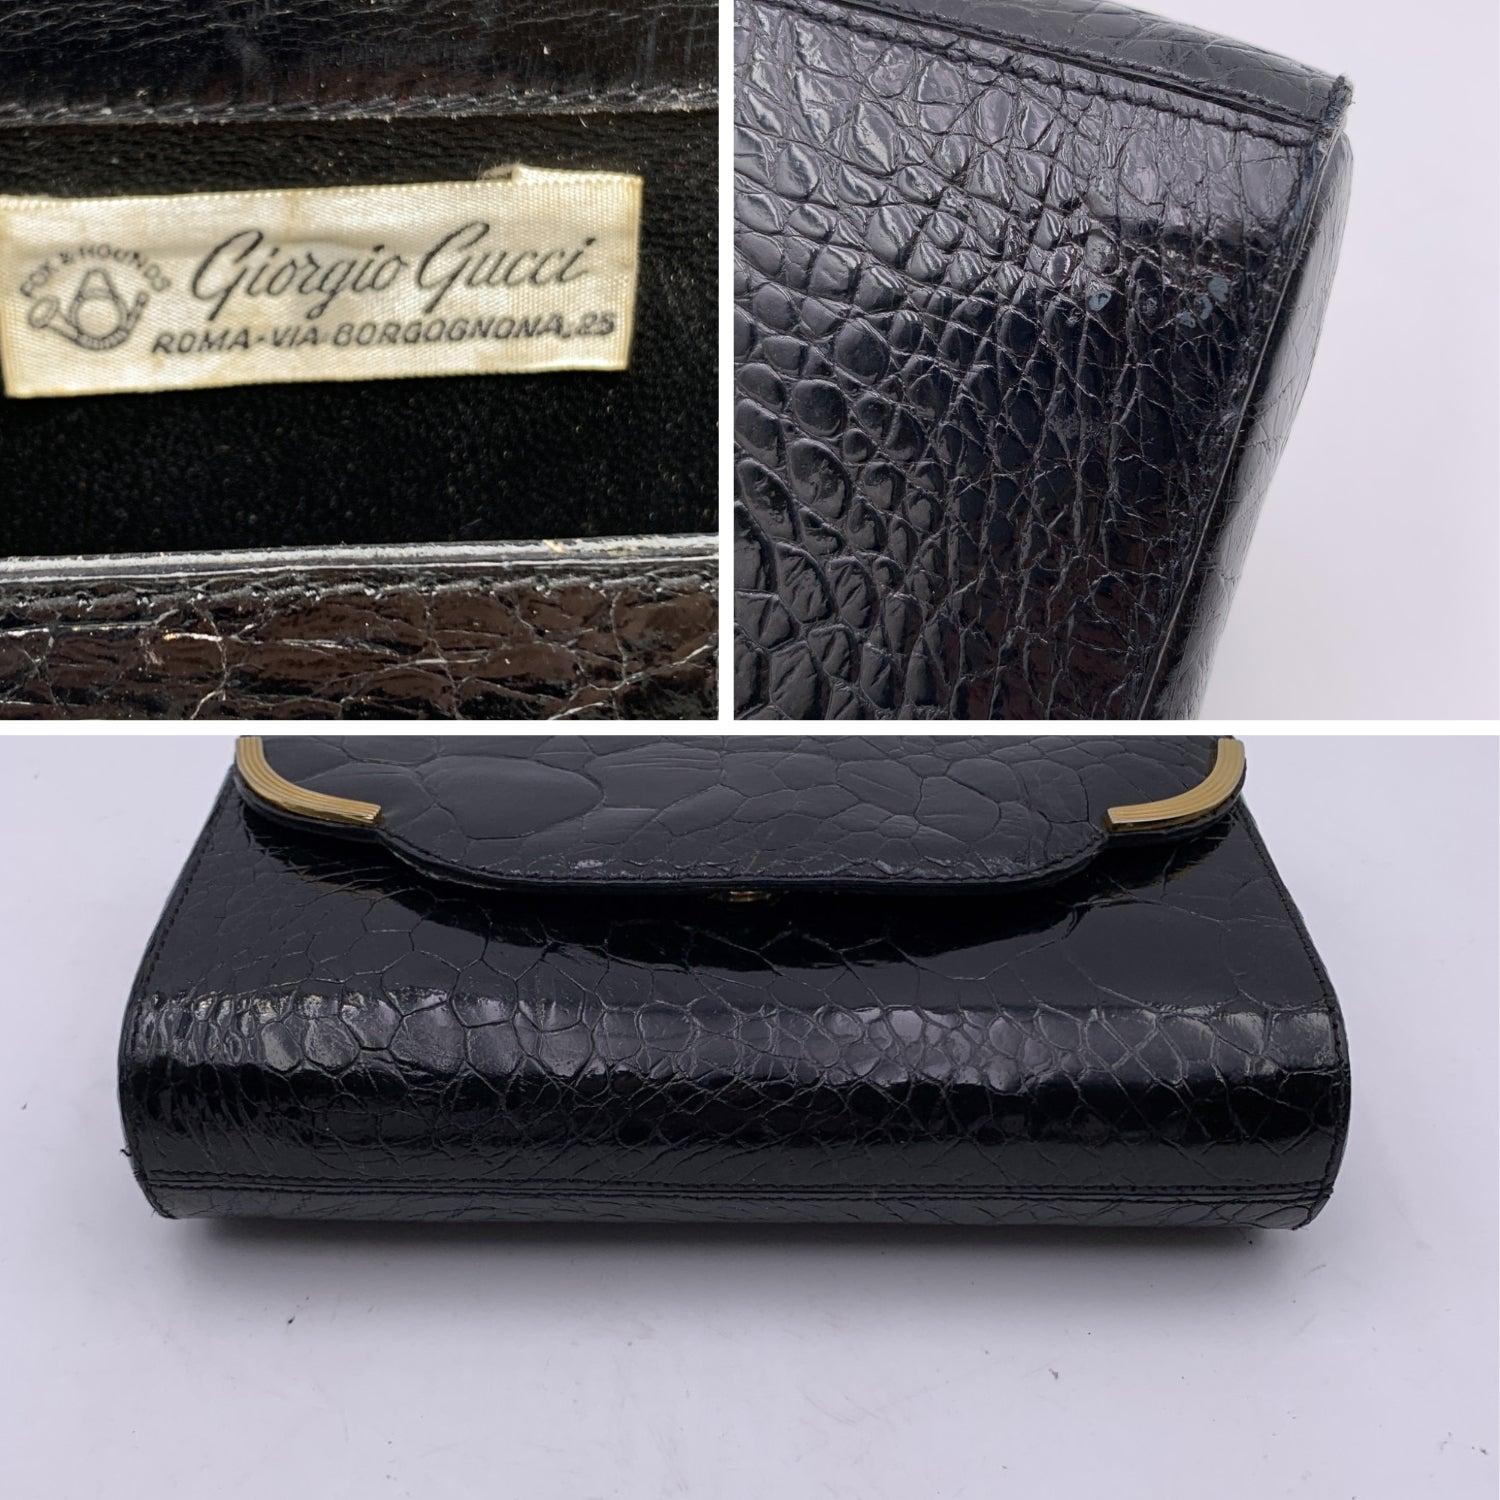 Women's Giorgio Gucci Vintage Black Leather Clutch Bag Handbag For Sale